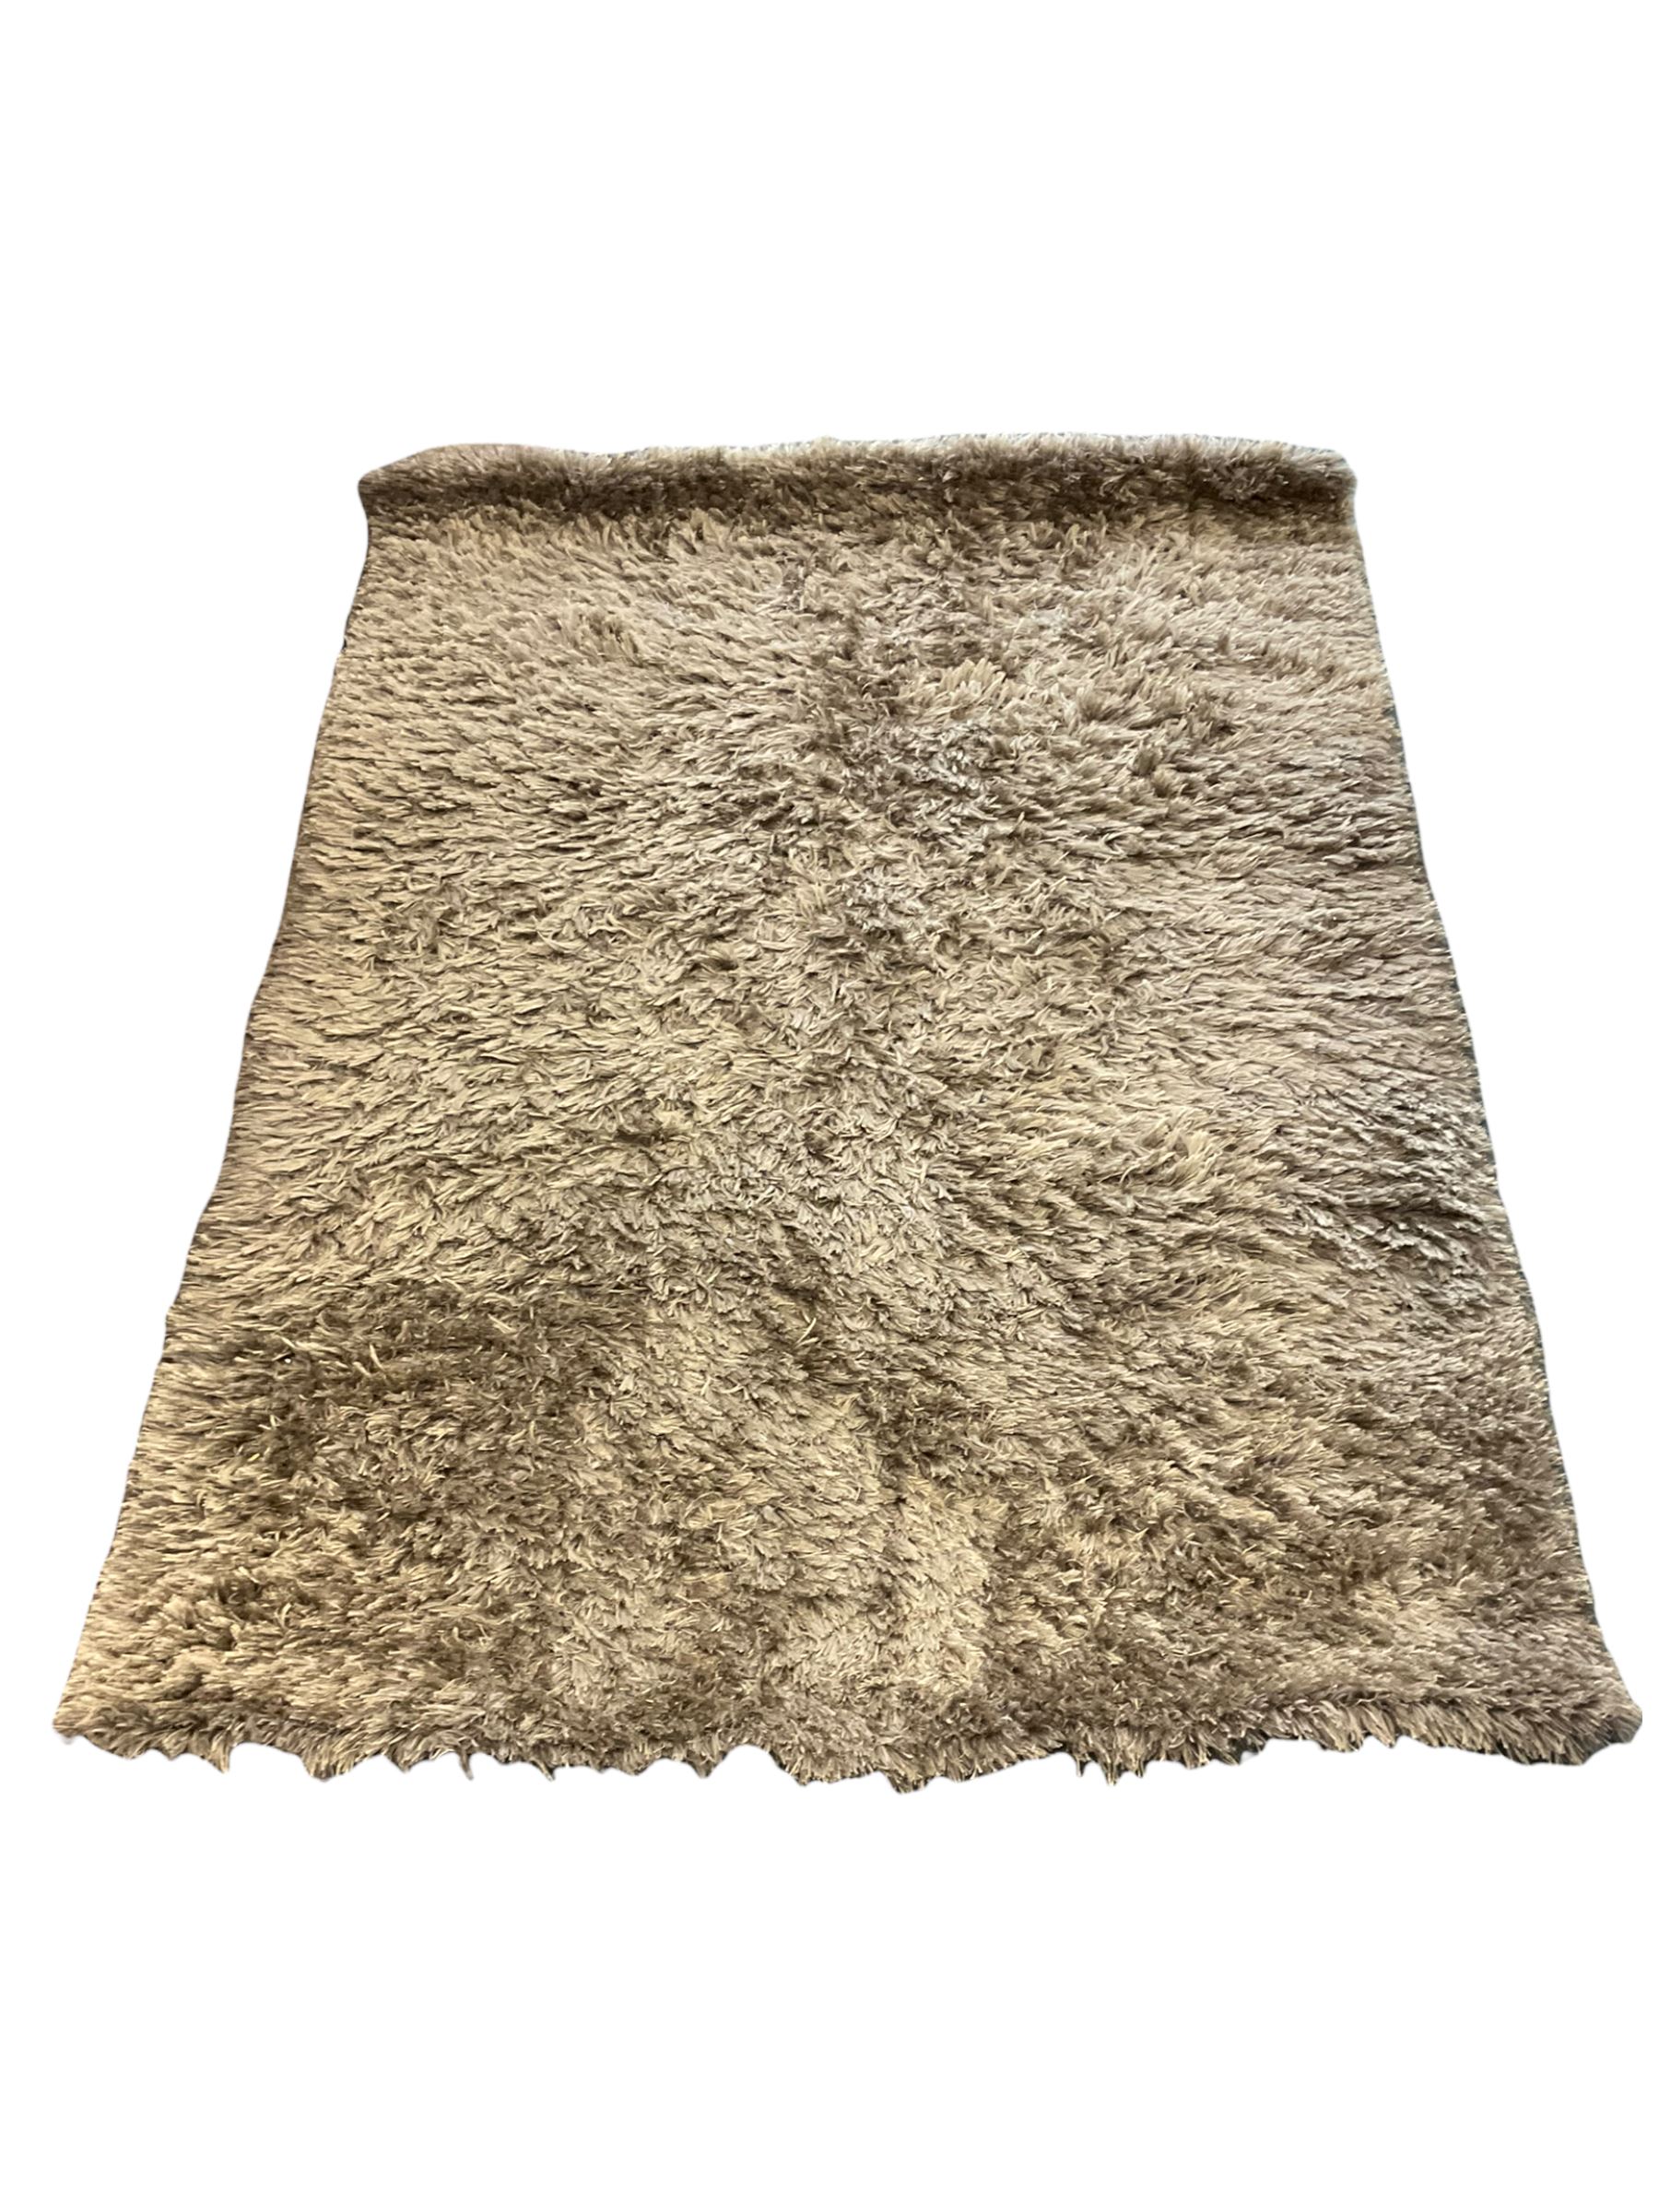 Rectangular modern rug - Image 3 of 7